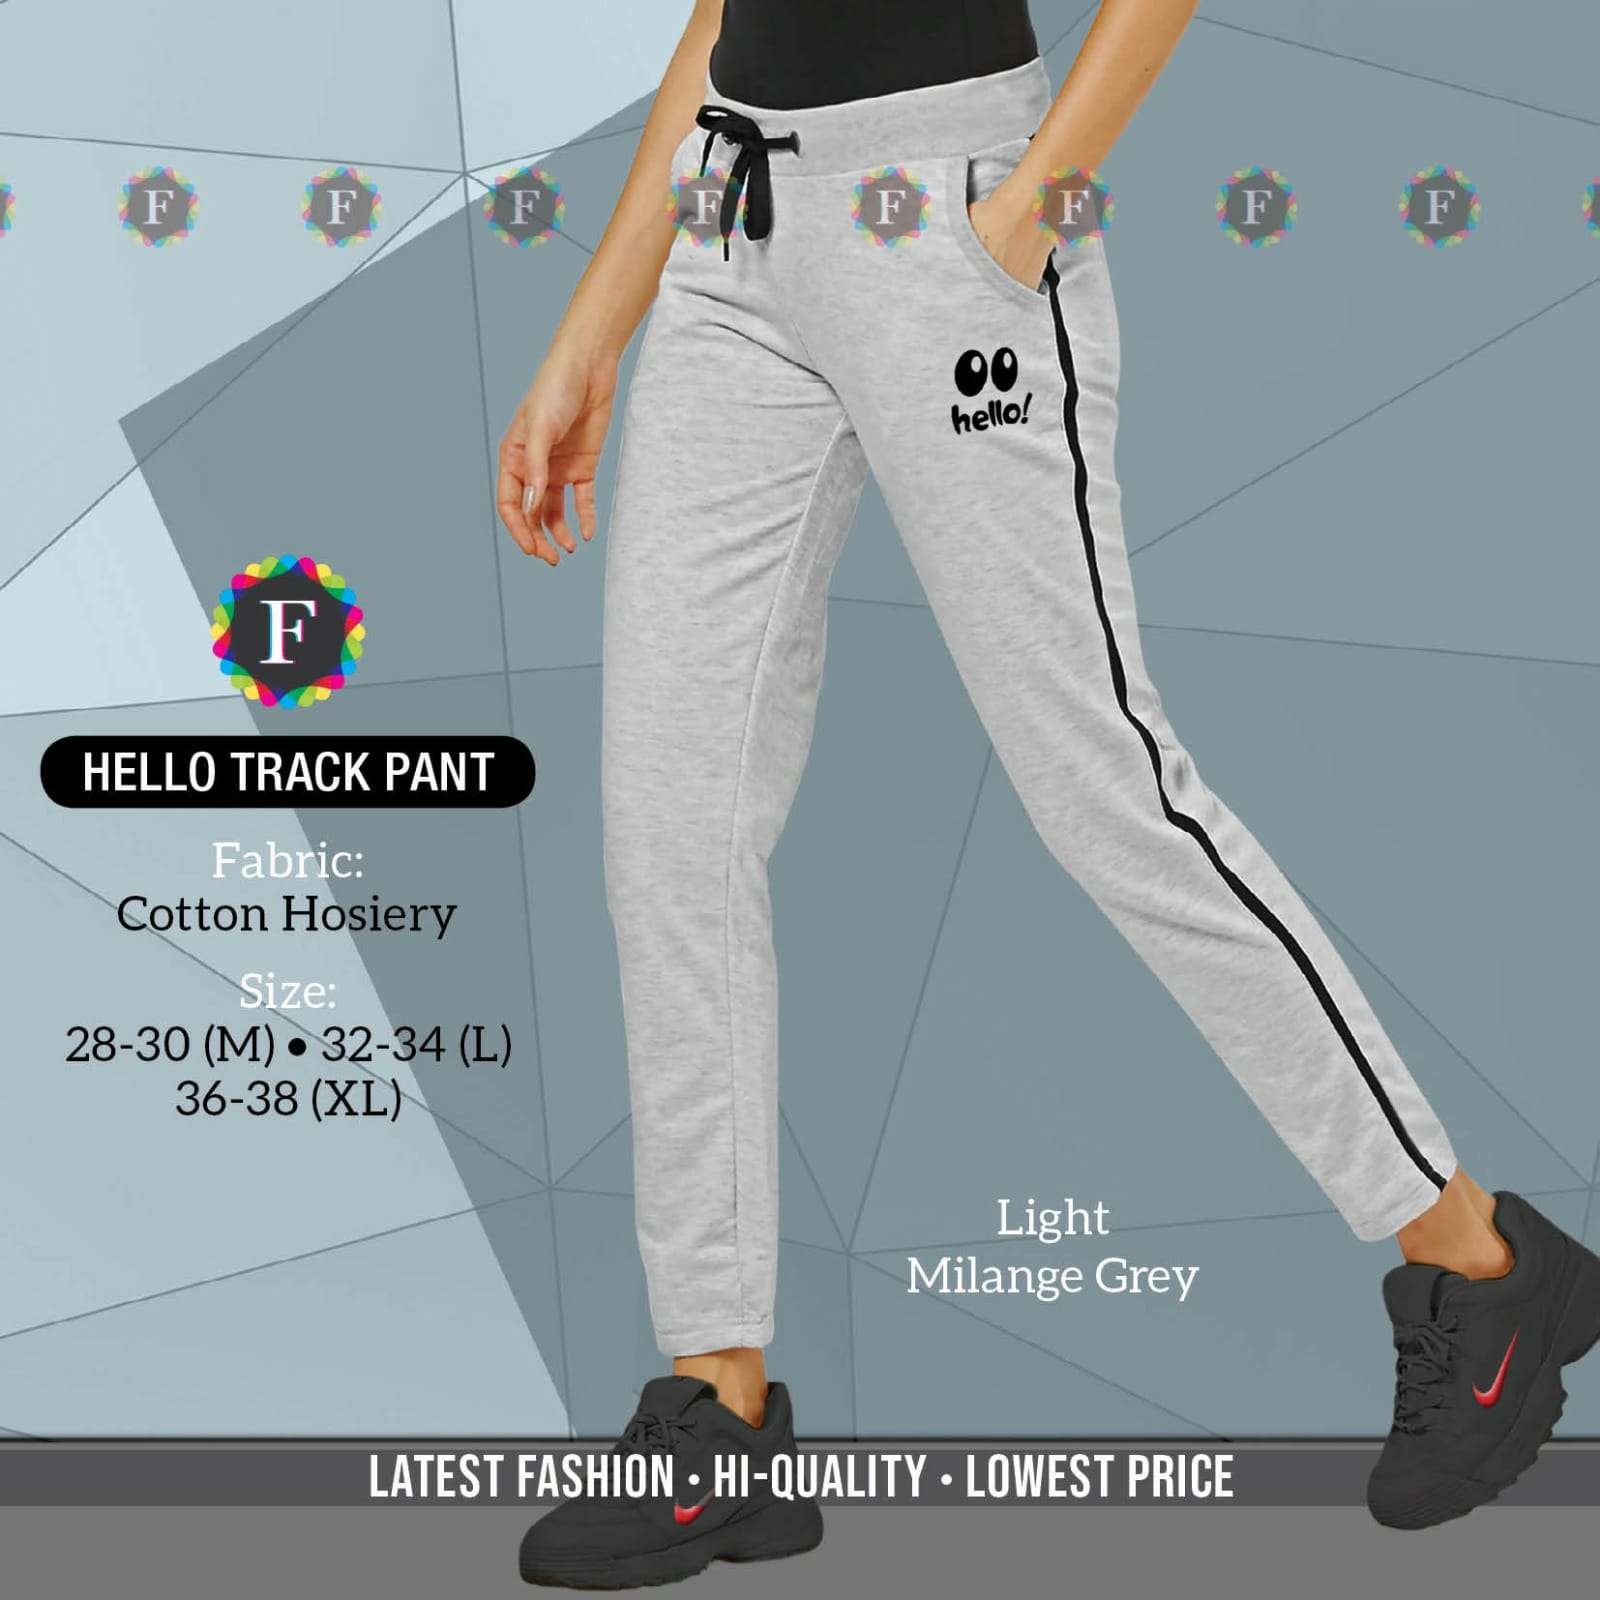 hello track pant cotton hosiery bottom wear design 